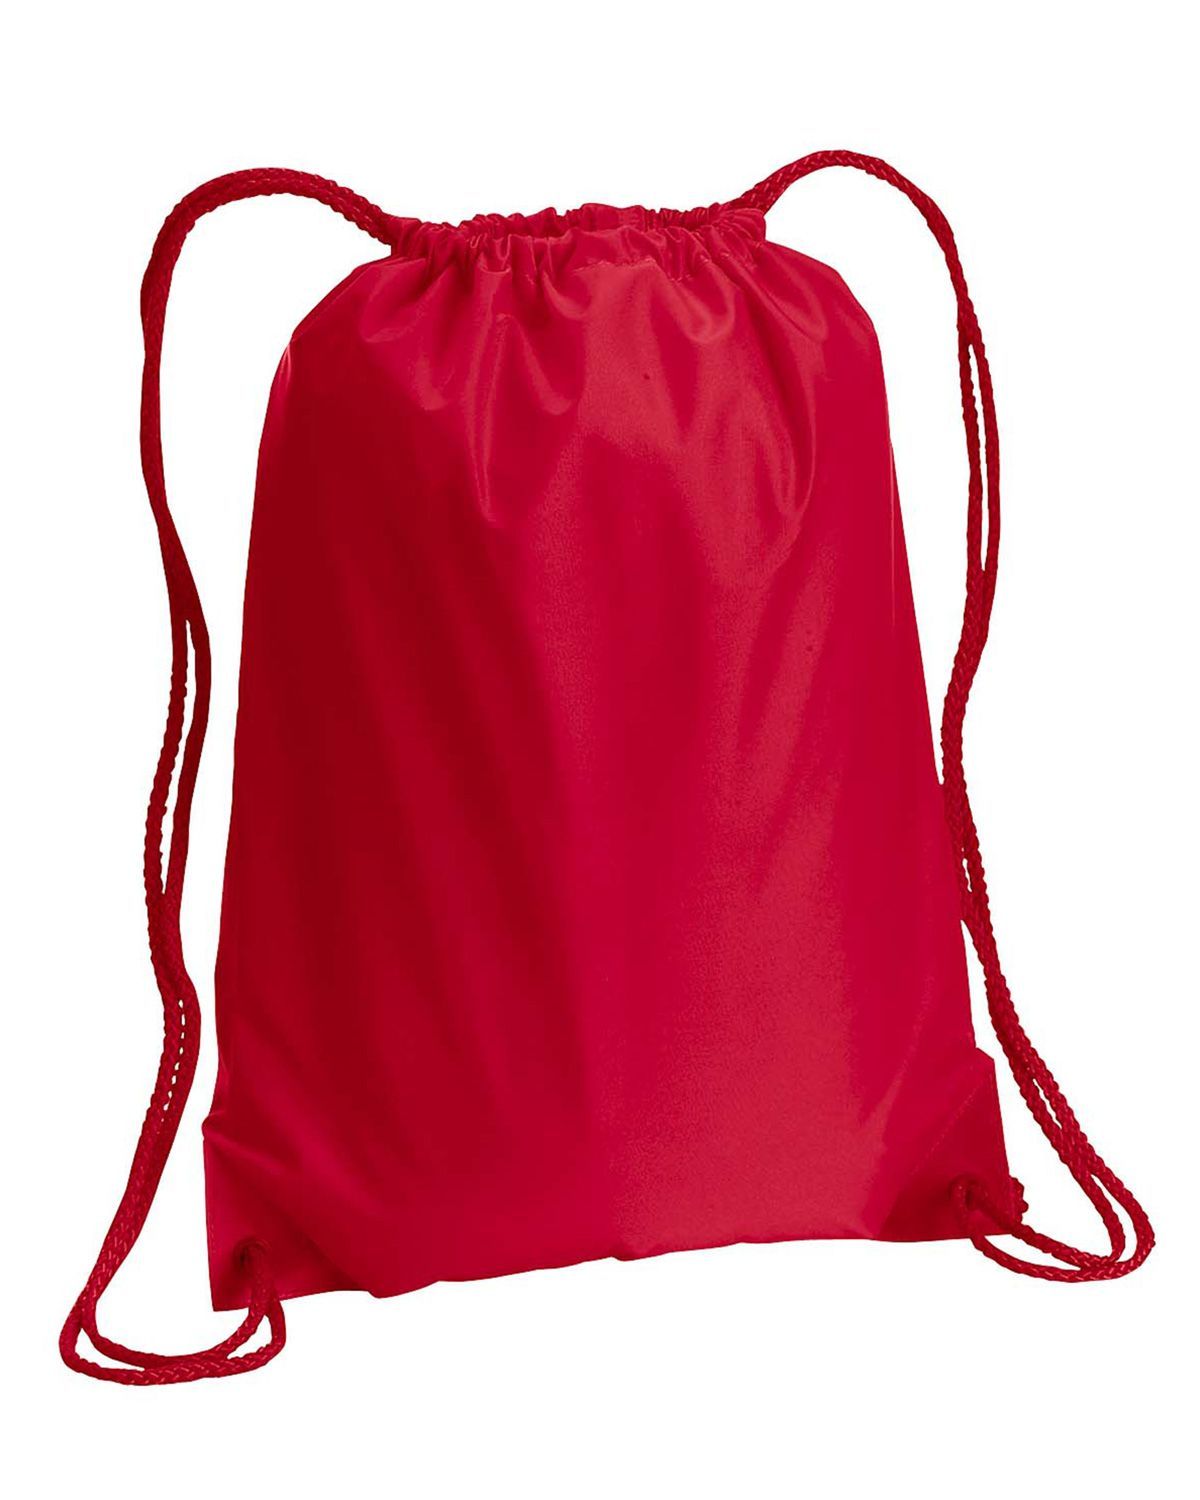 Liberty Bags 8881 Sport Pack - ApparelnBags.com